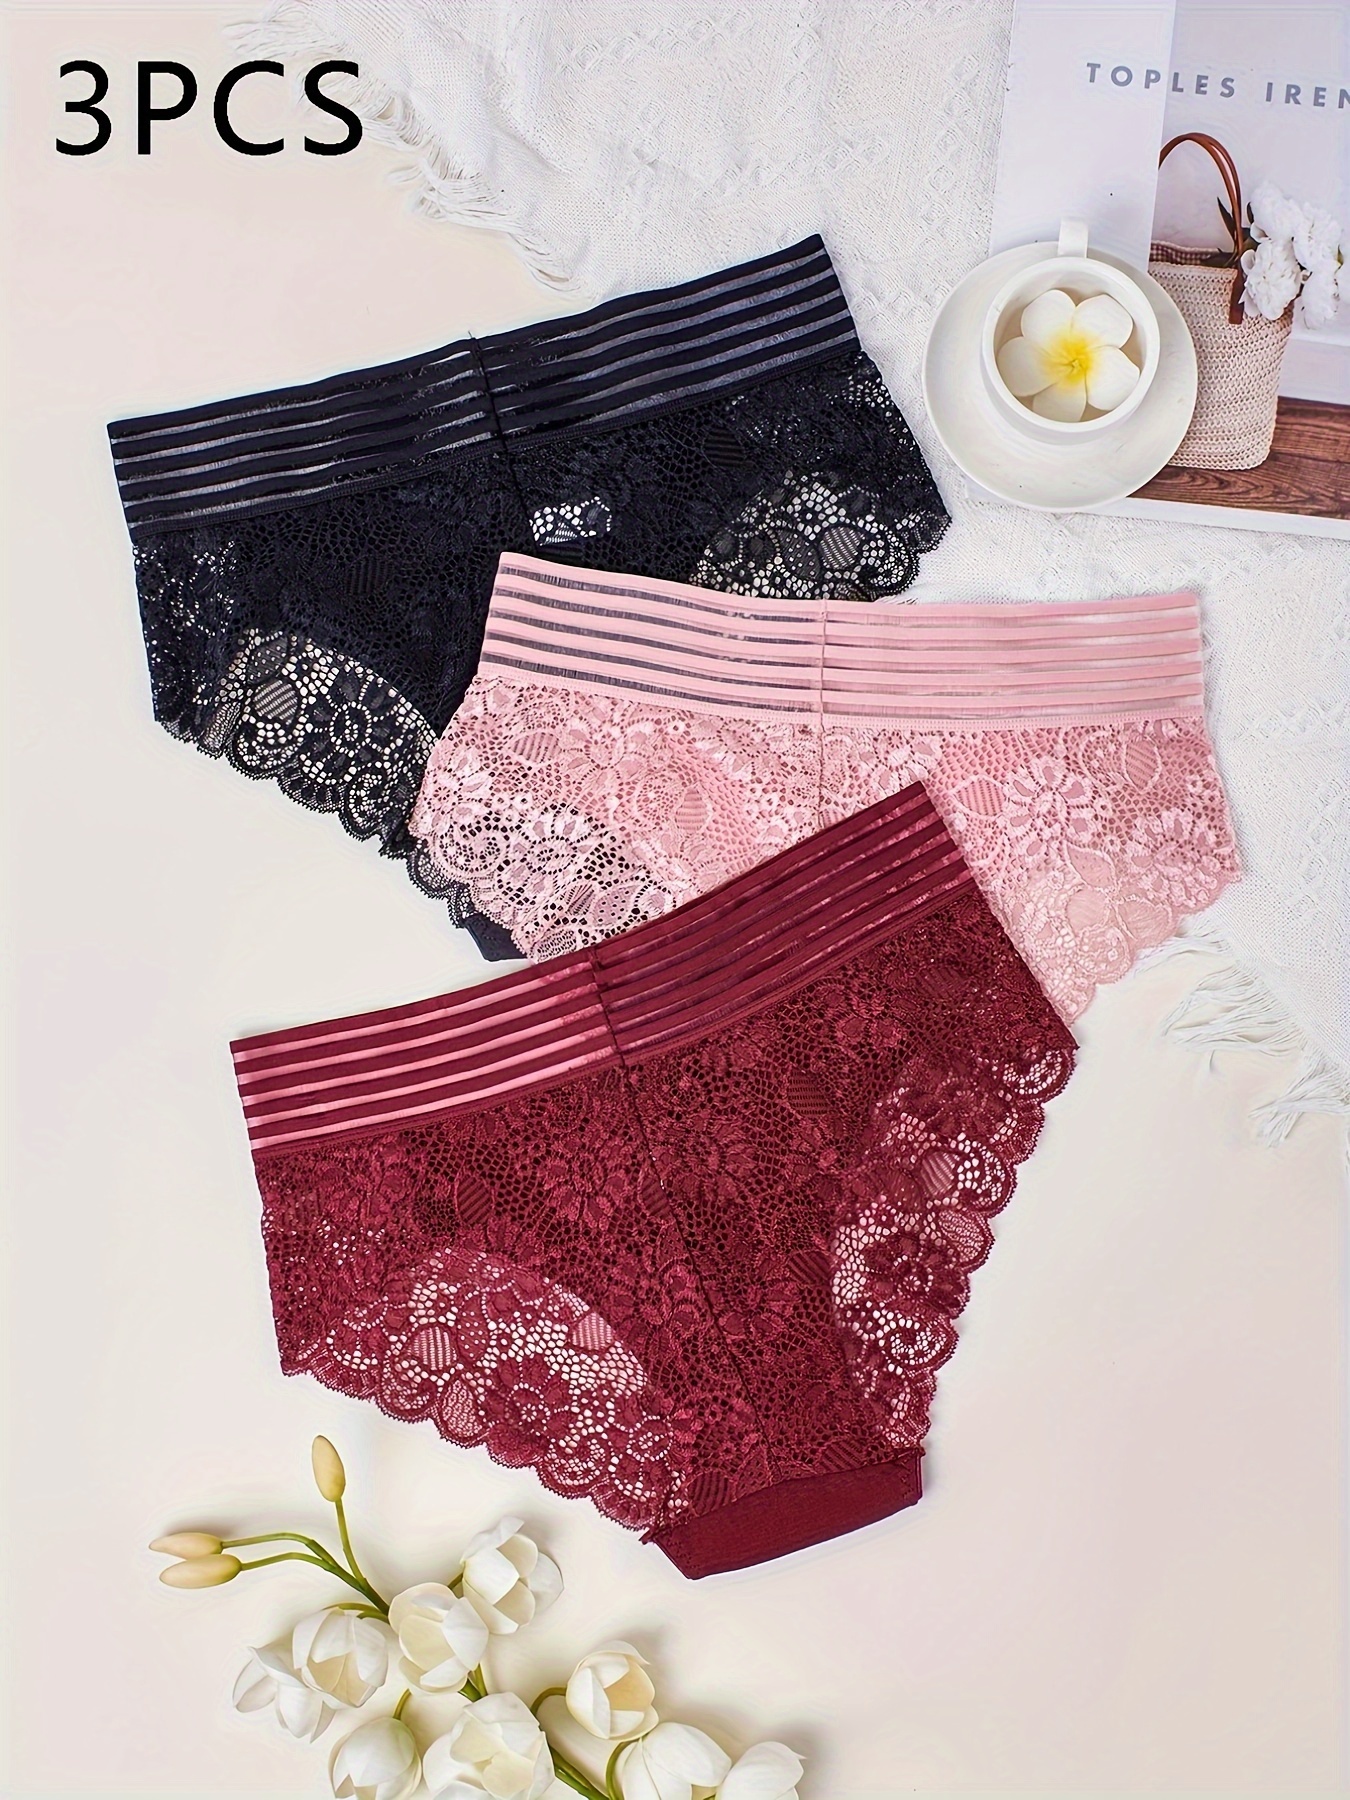 NEW) 3pcs 3pk H&M cotton lace panties, Women's Fashion, New